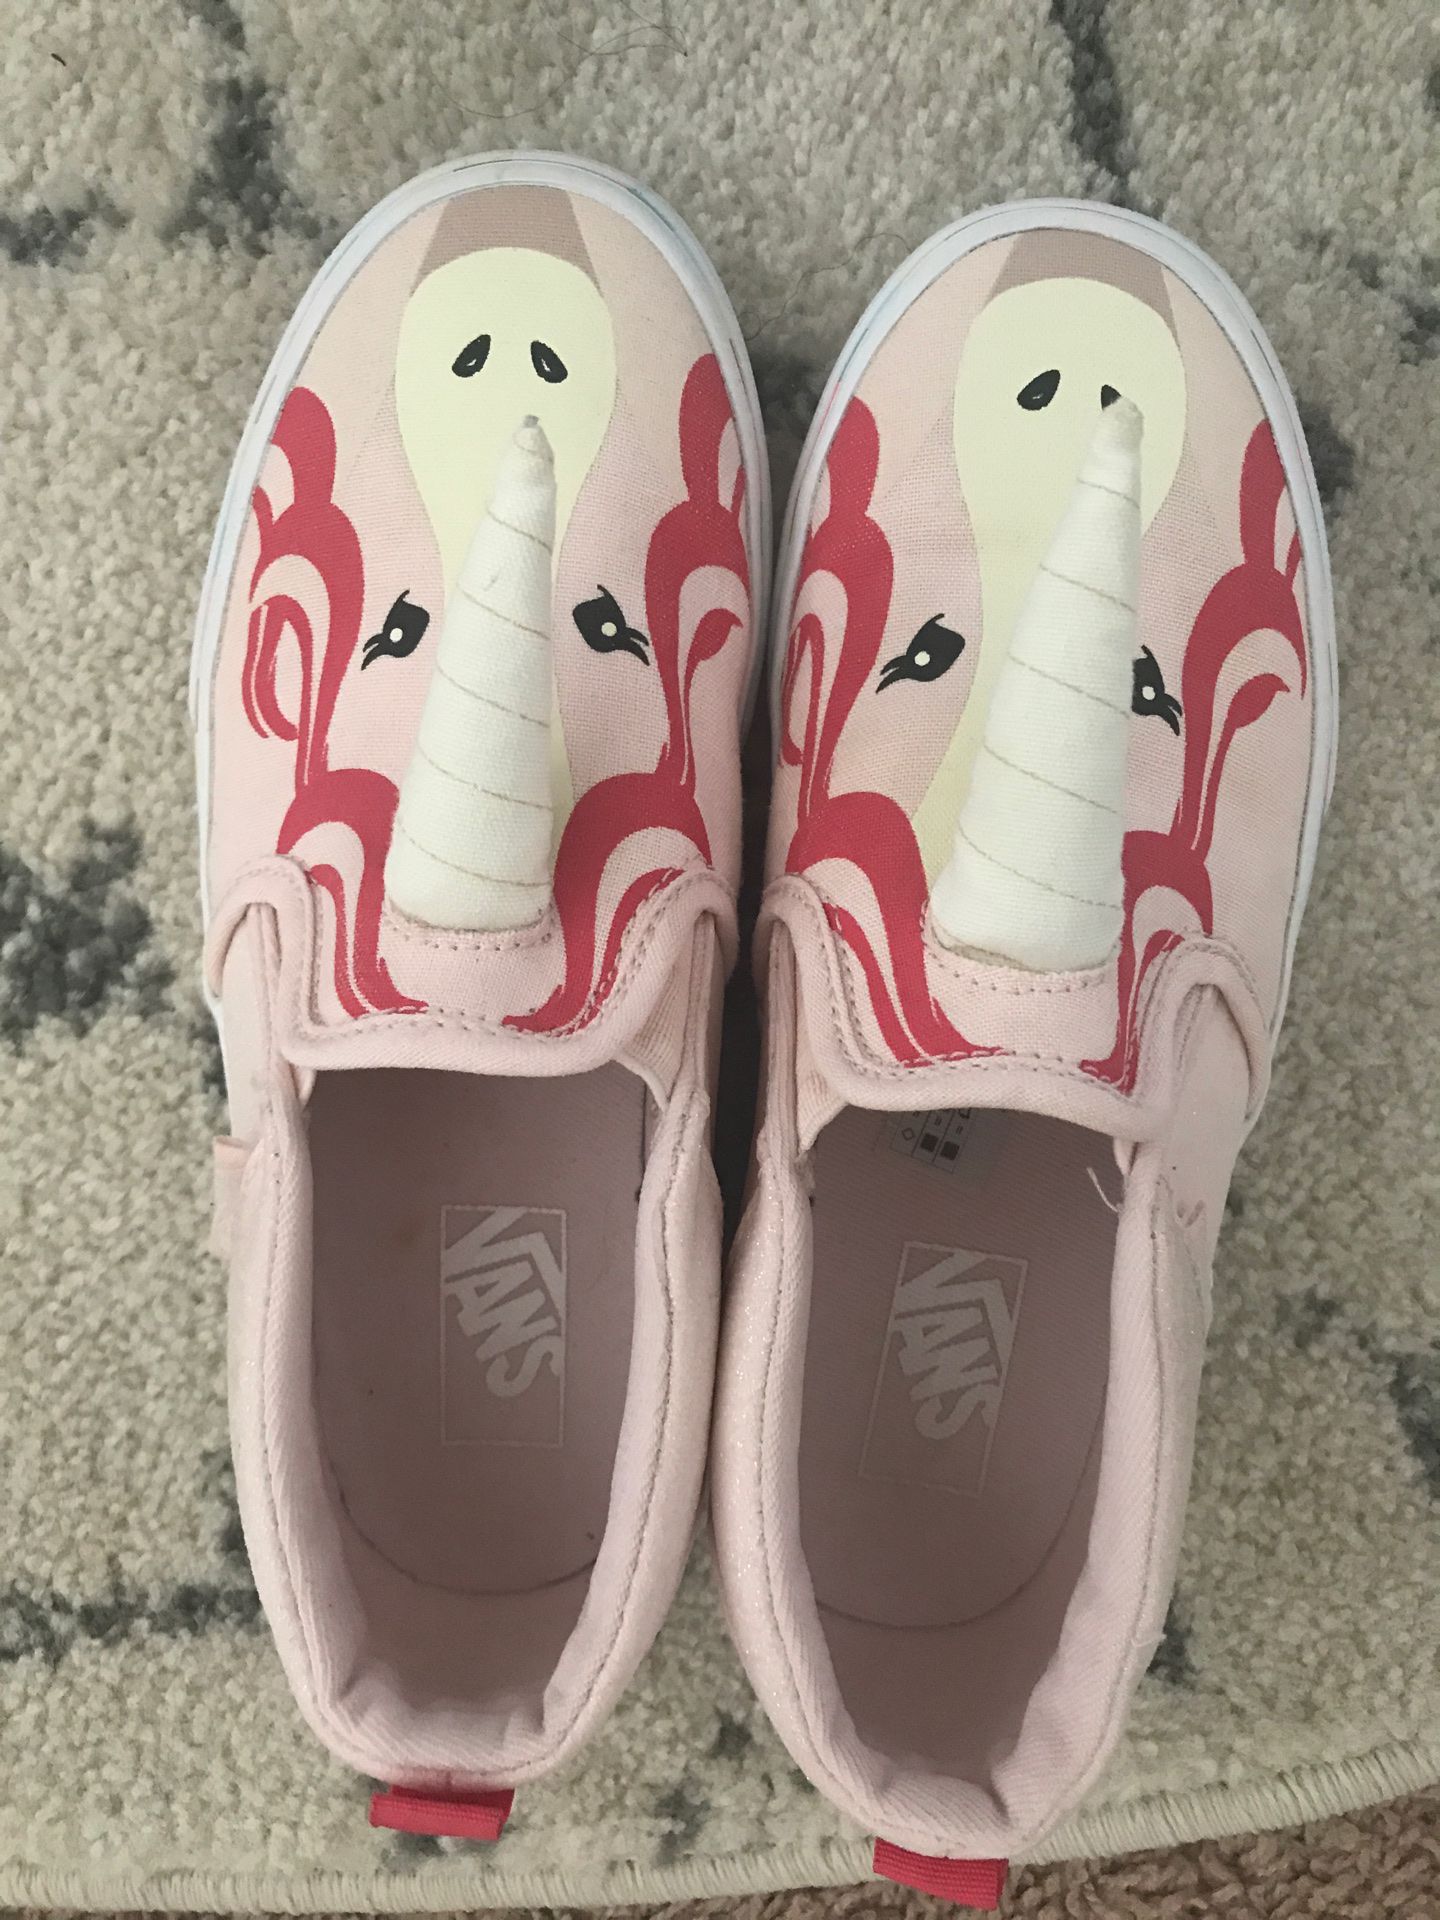 Vans - Unicorn 🦄 Slip-on Sneakers - Size 2